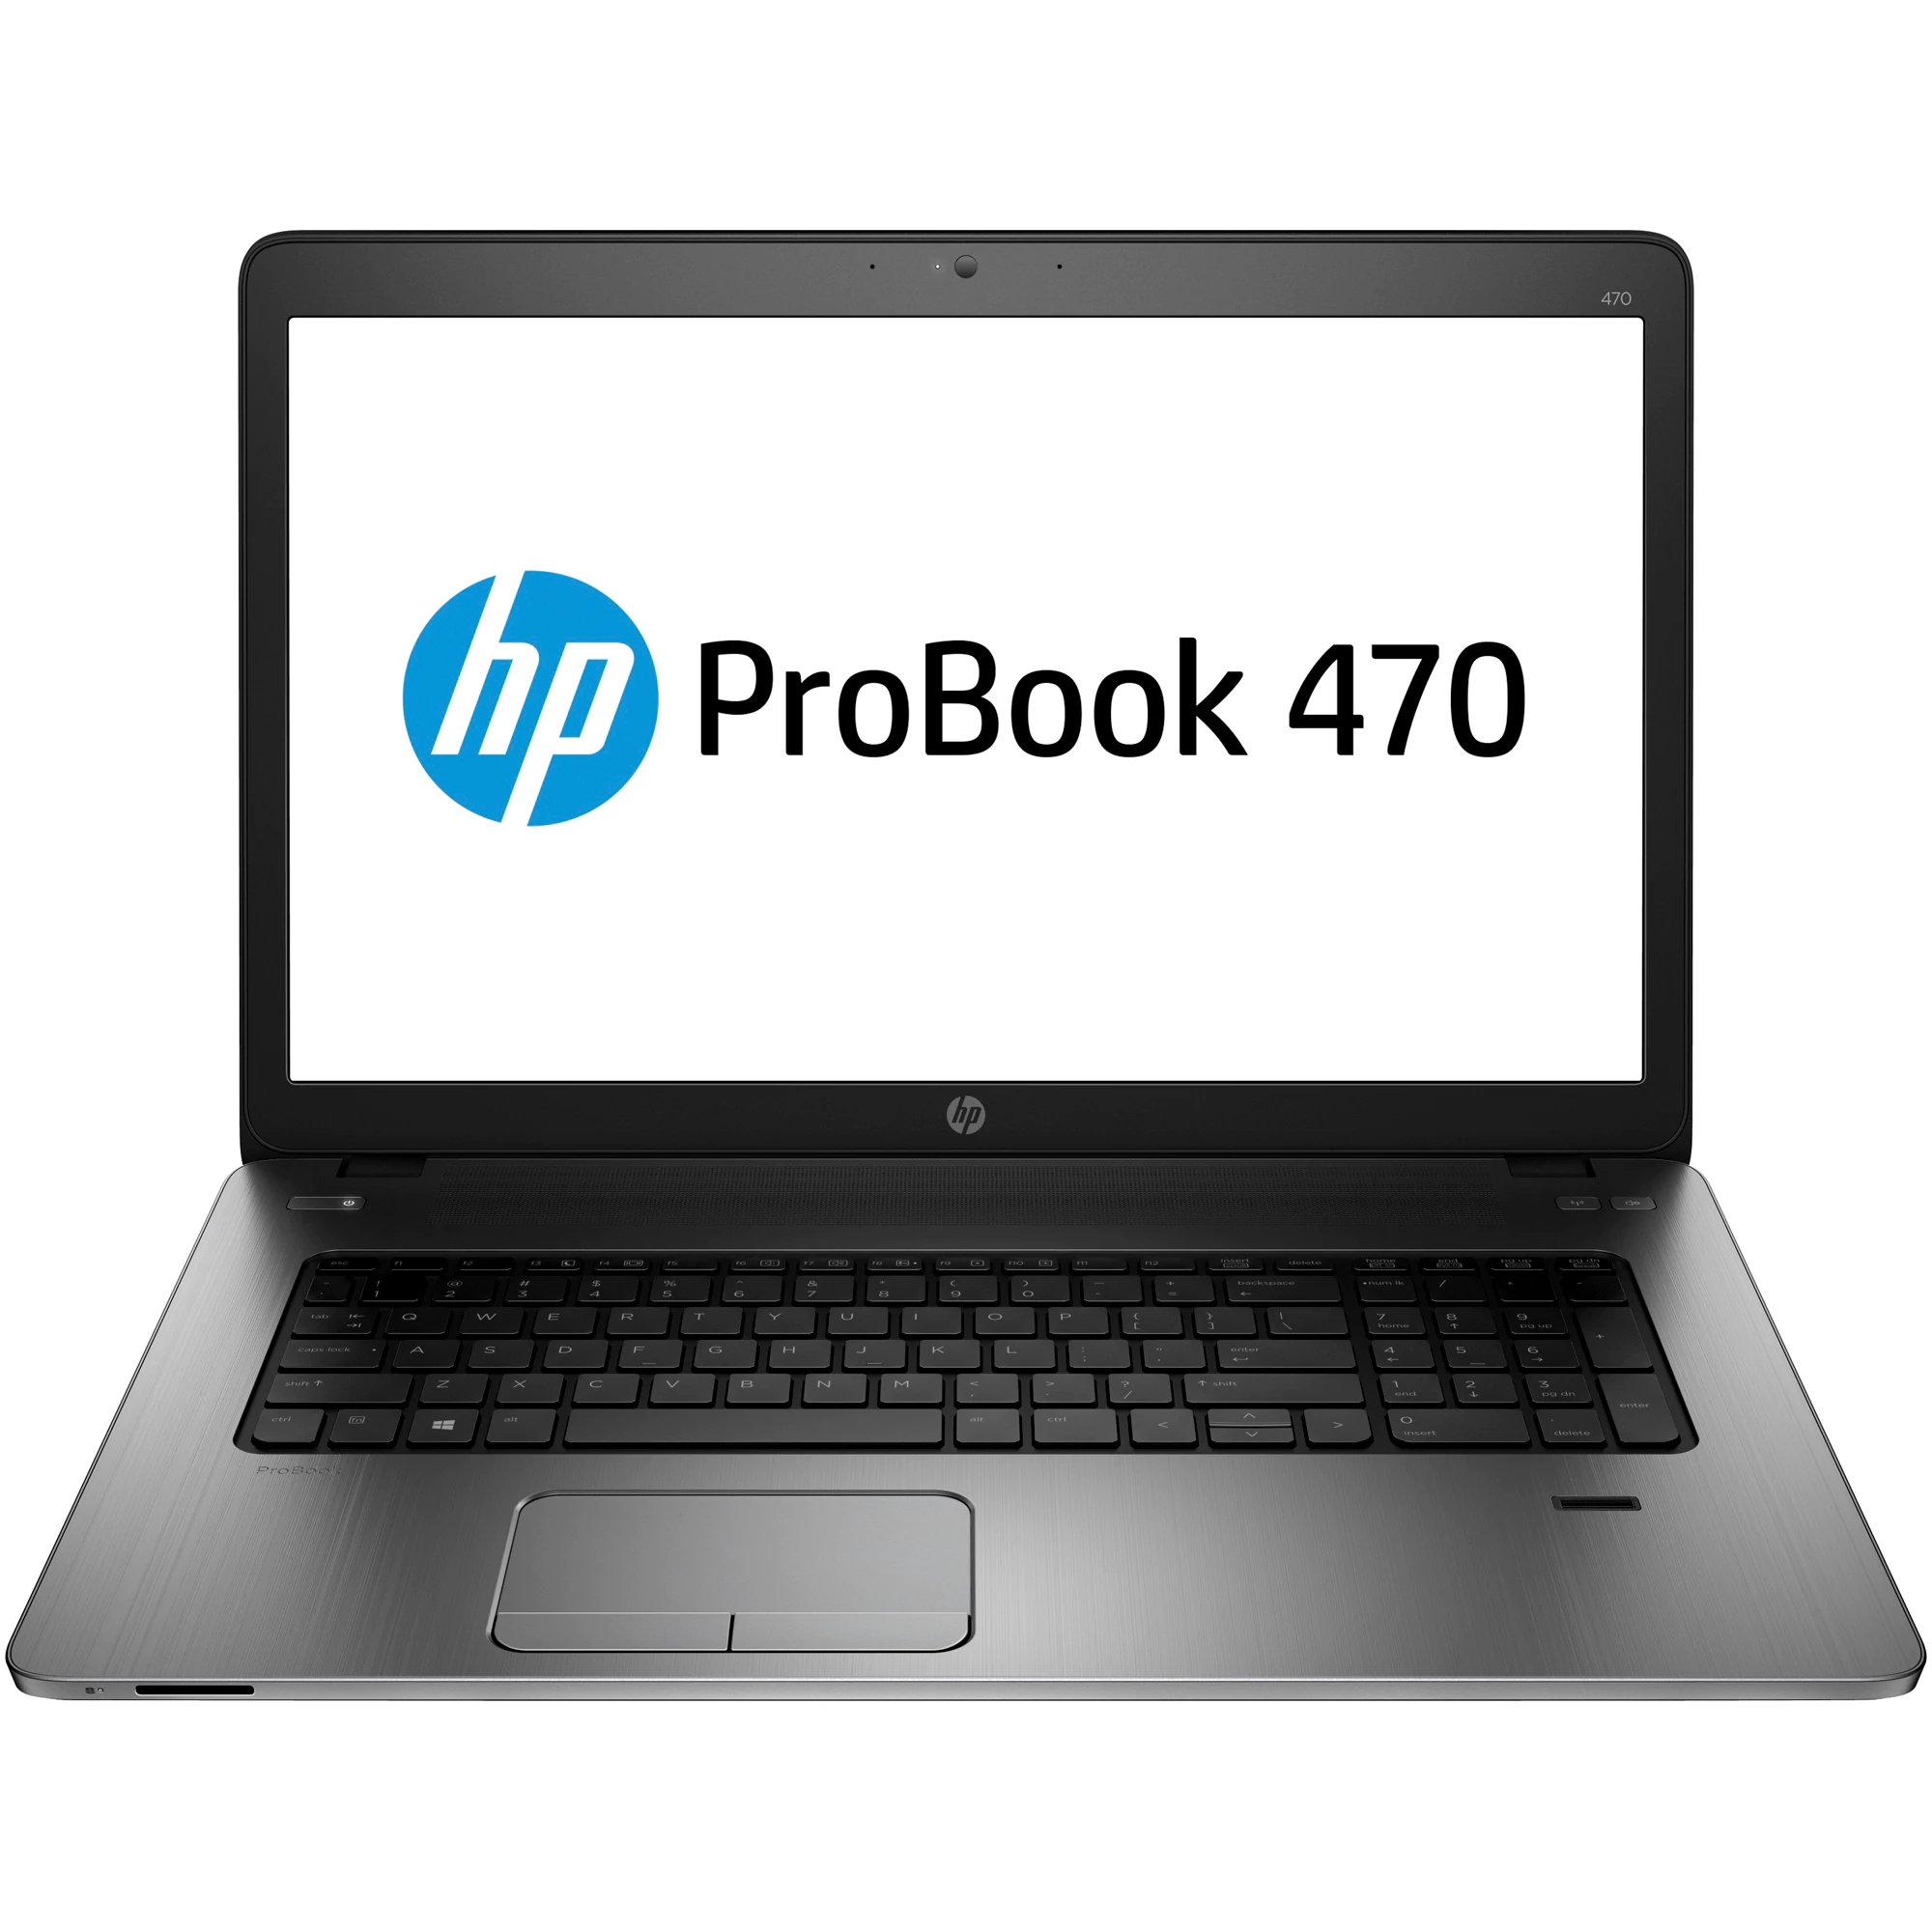 Laptop HP ProBook 470 G2, Intel Core i5-5200U 2.20GHz, 4GB DDR3, 120GB SSD, DVD-RW, 17.3 Inch, Webcam, Tastatura Numerica